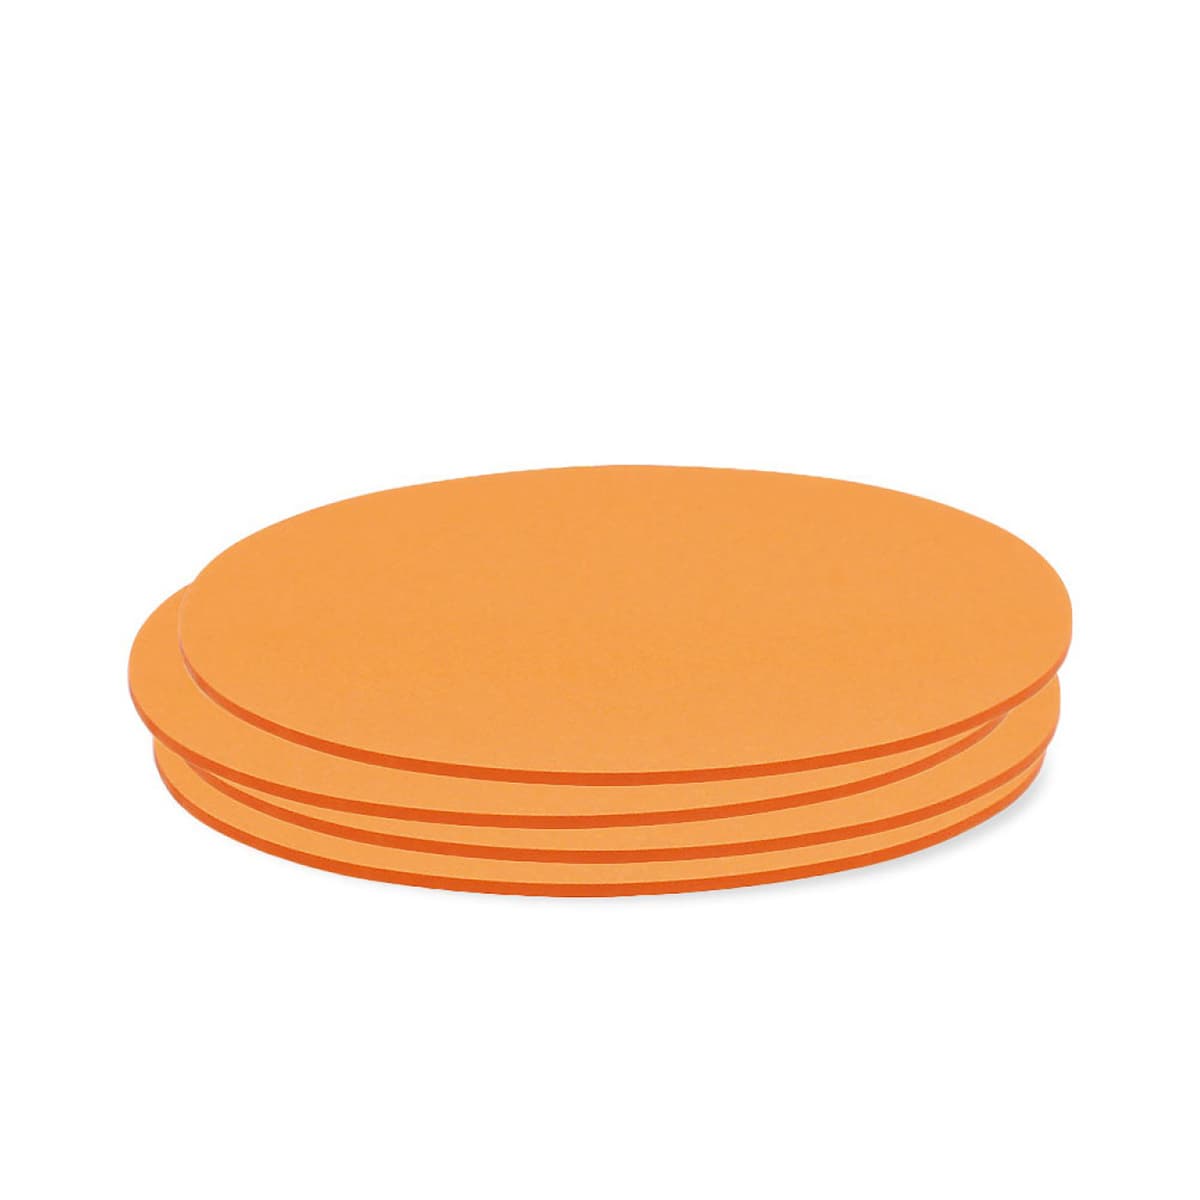 Zelfklevende ovale kaarten, uni kleuren- 6 orange